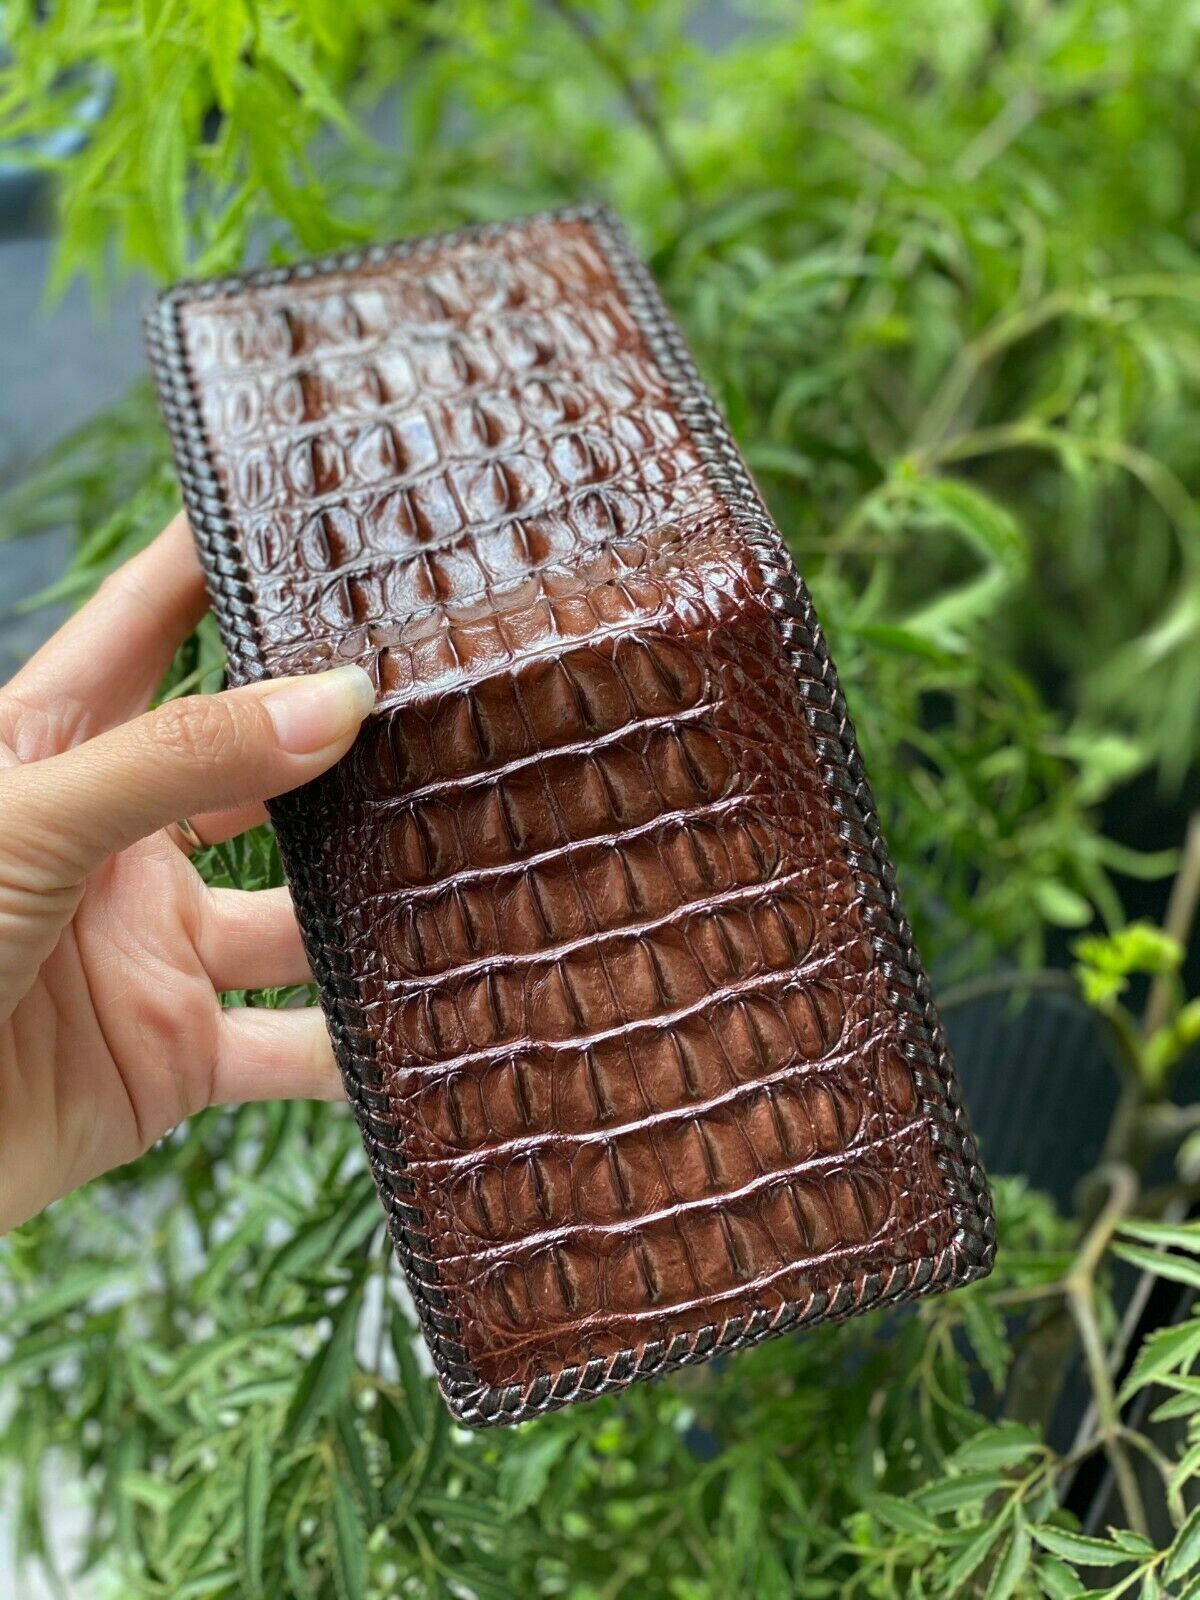 Double side Genuine alligator Crocodile leather skin brown bifold wallet  for men